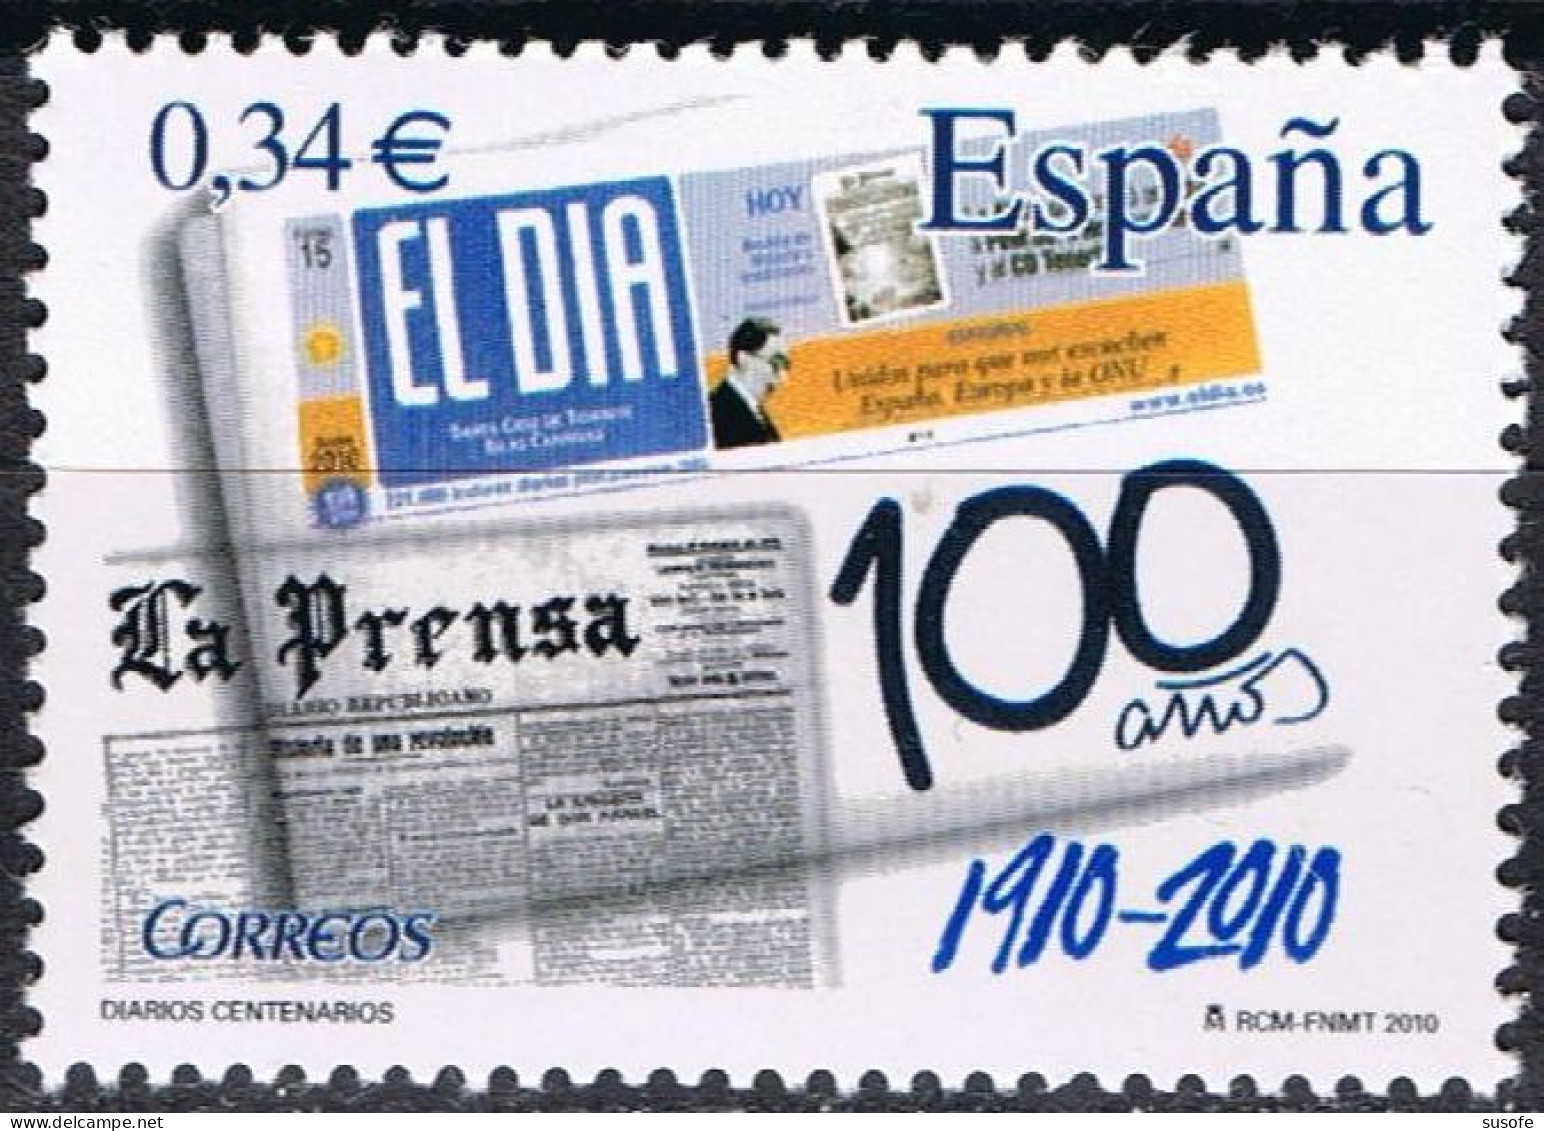 España 2010 Edifil 4604 Sello ** Diarios Centenarios El Dia (1910-2010) Tenerife Michel 4551 Yvert 4256 Spain Stamp - Ungebraucht